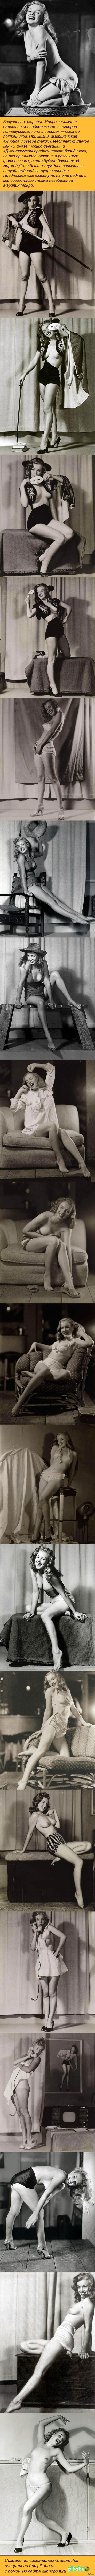 Norma Jean Baker. Not like we know! - NSFW, Marilyn Monroe, Erotic, The photo, Longpost